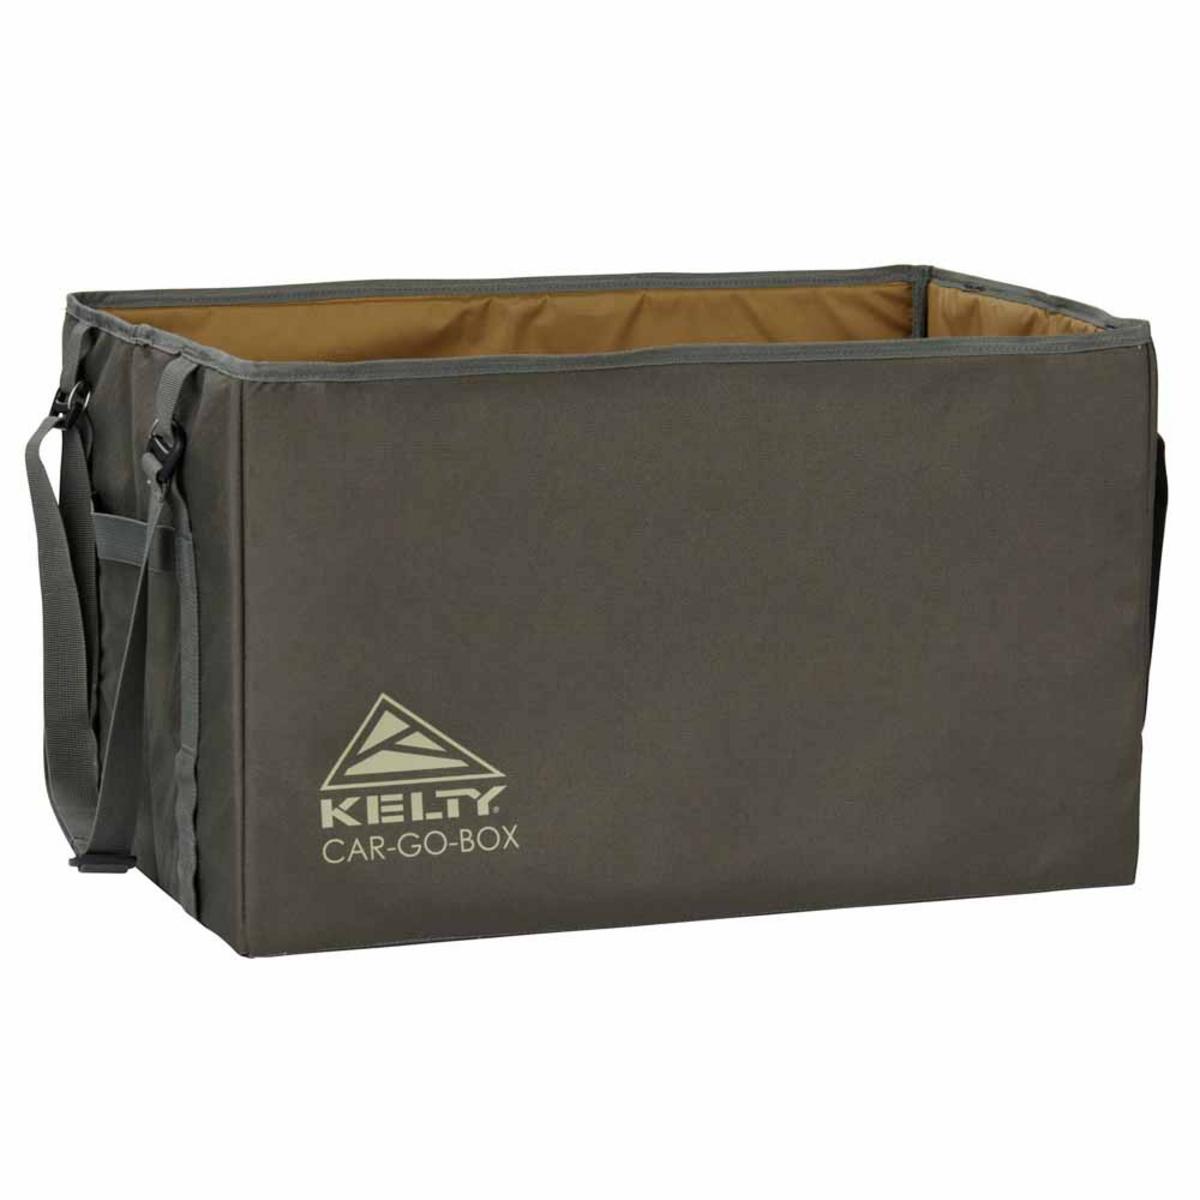 Kelty 46.5L Car-Go-Box - Beluga/Dull Gold